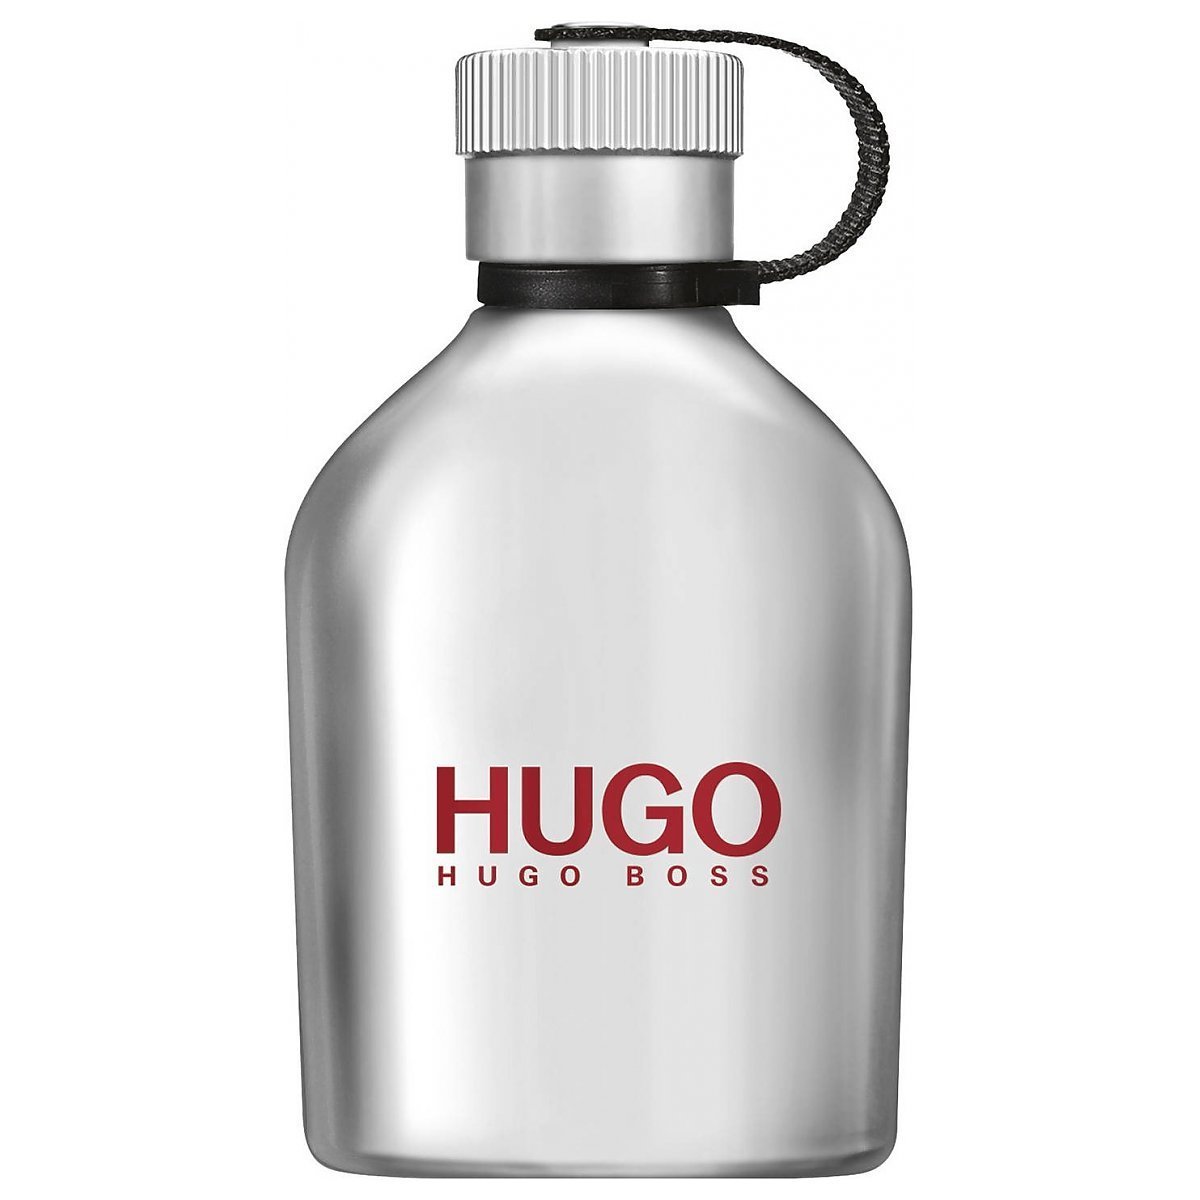 hugo boss hugo iced woda toaletowa 125 ml  tester 